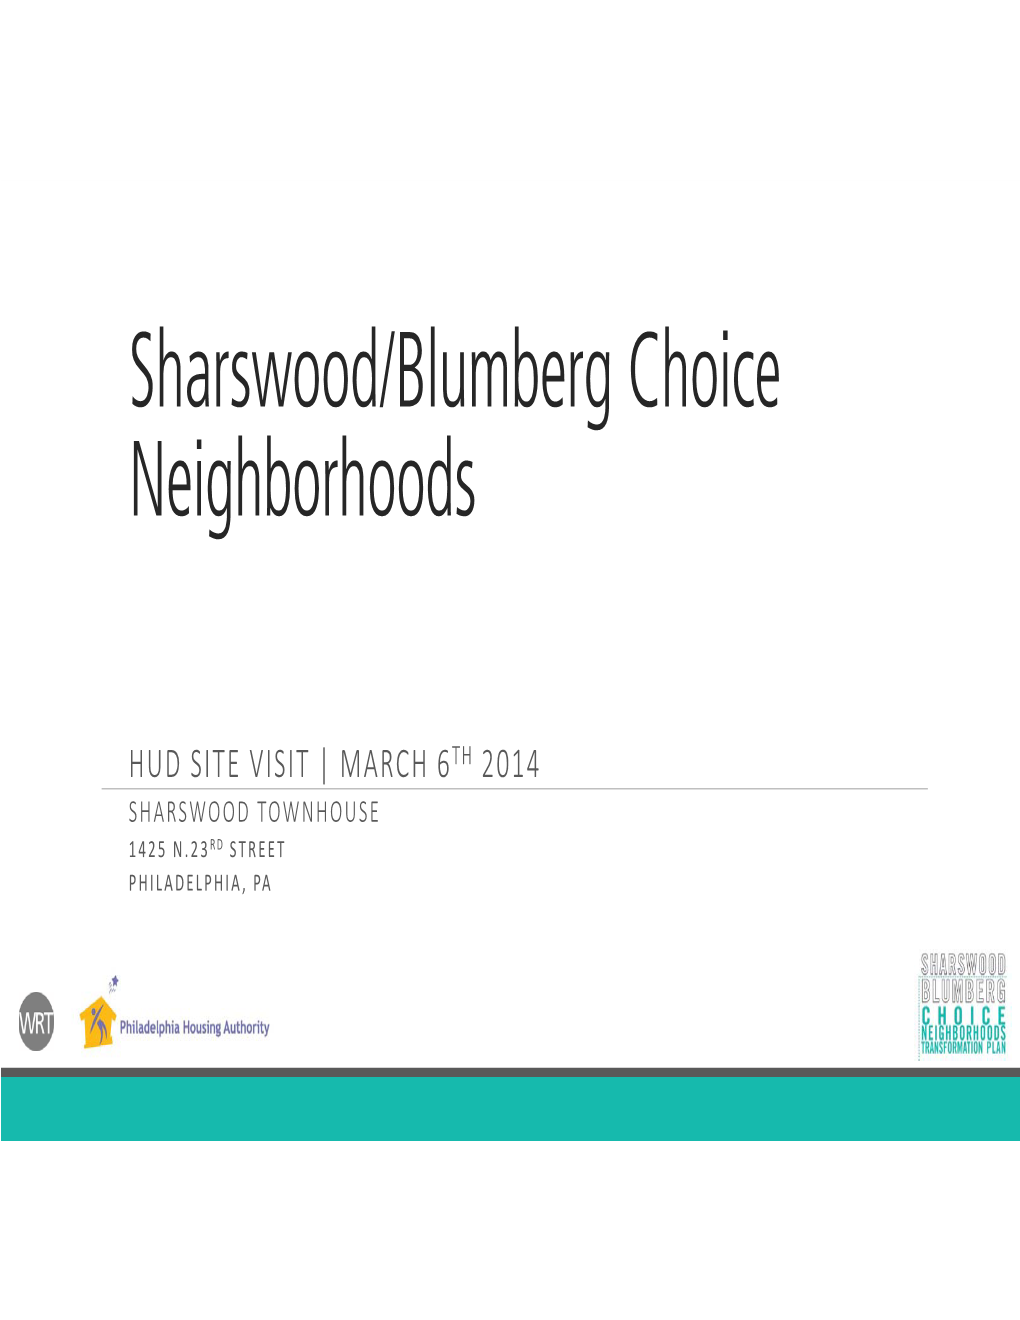 Sharswood/Blumberg Choice Neighborhoods